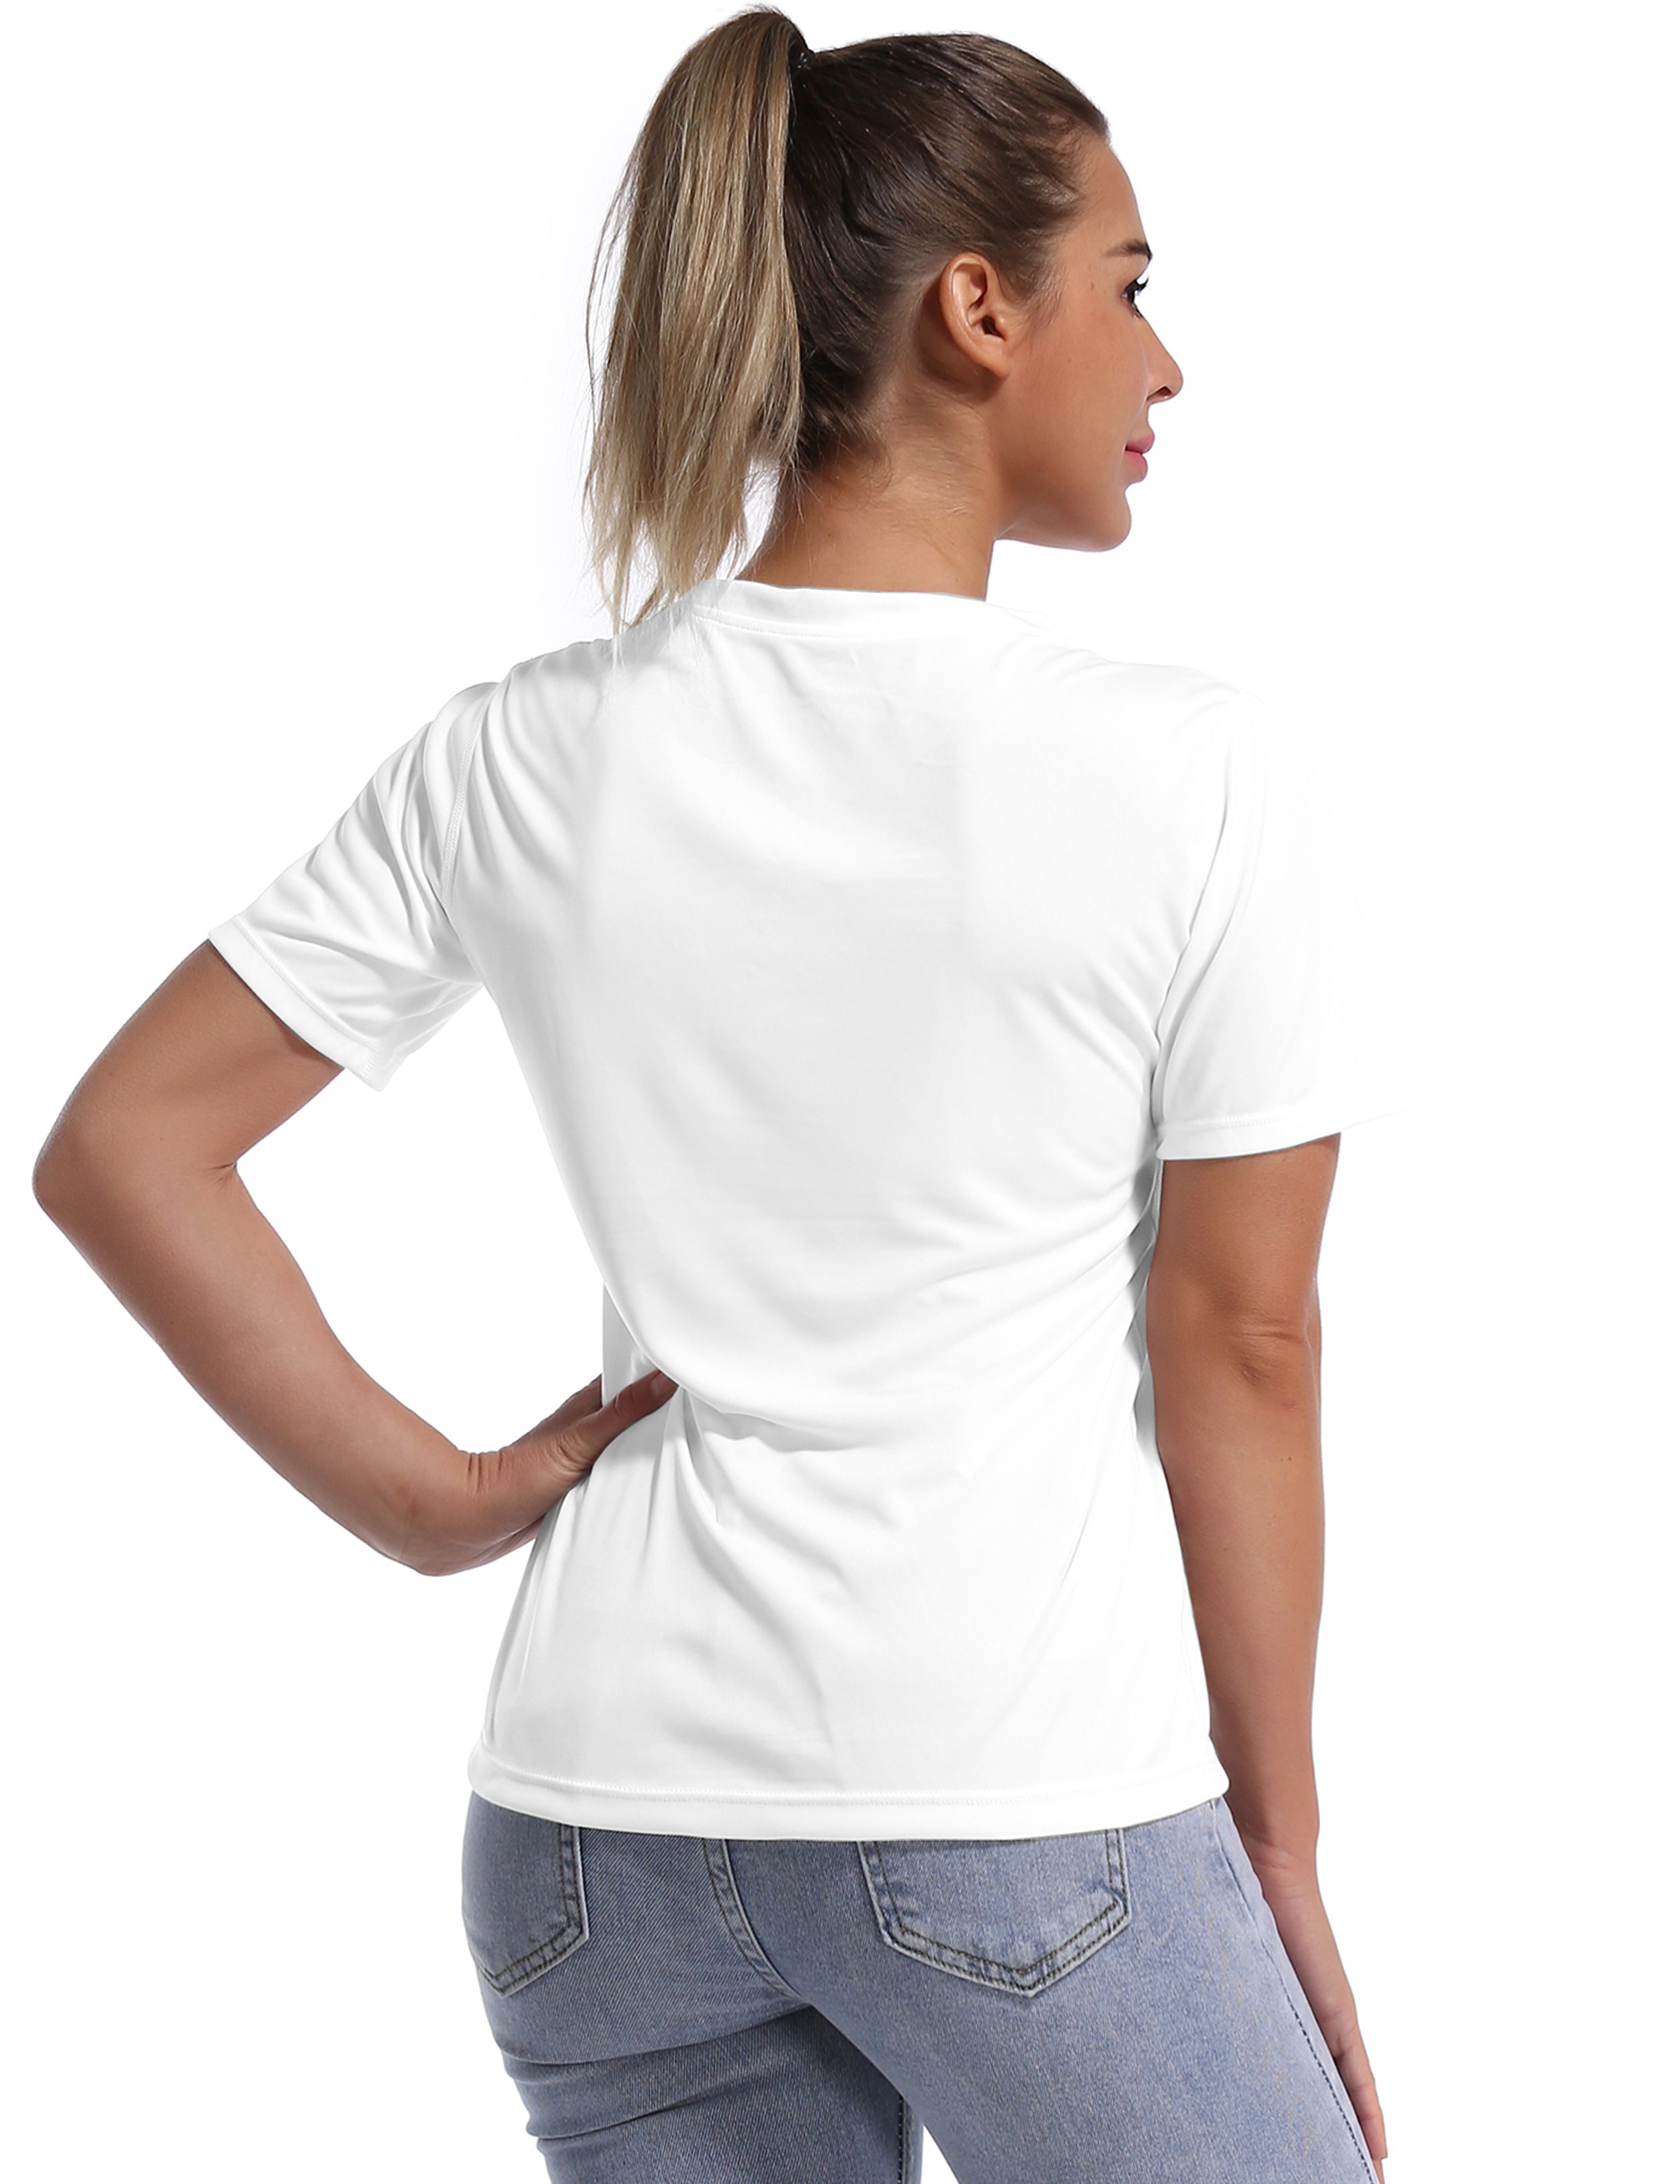 V-Neck Short Sleeve Athletic Shirts white_Pilates